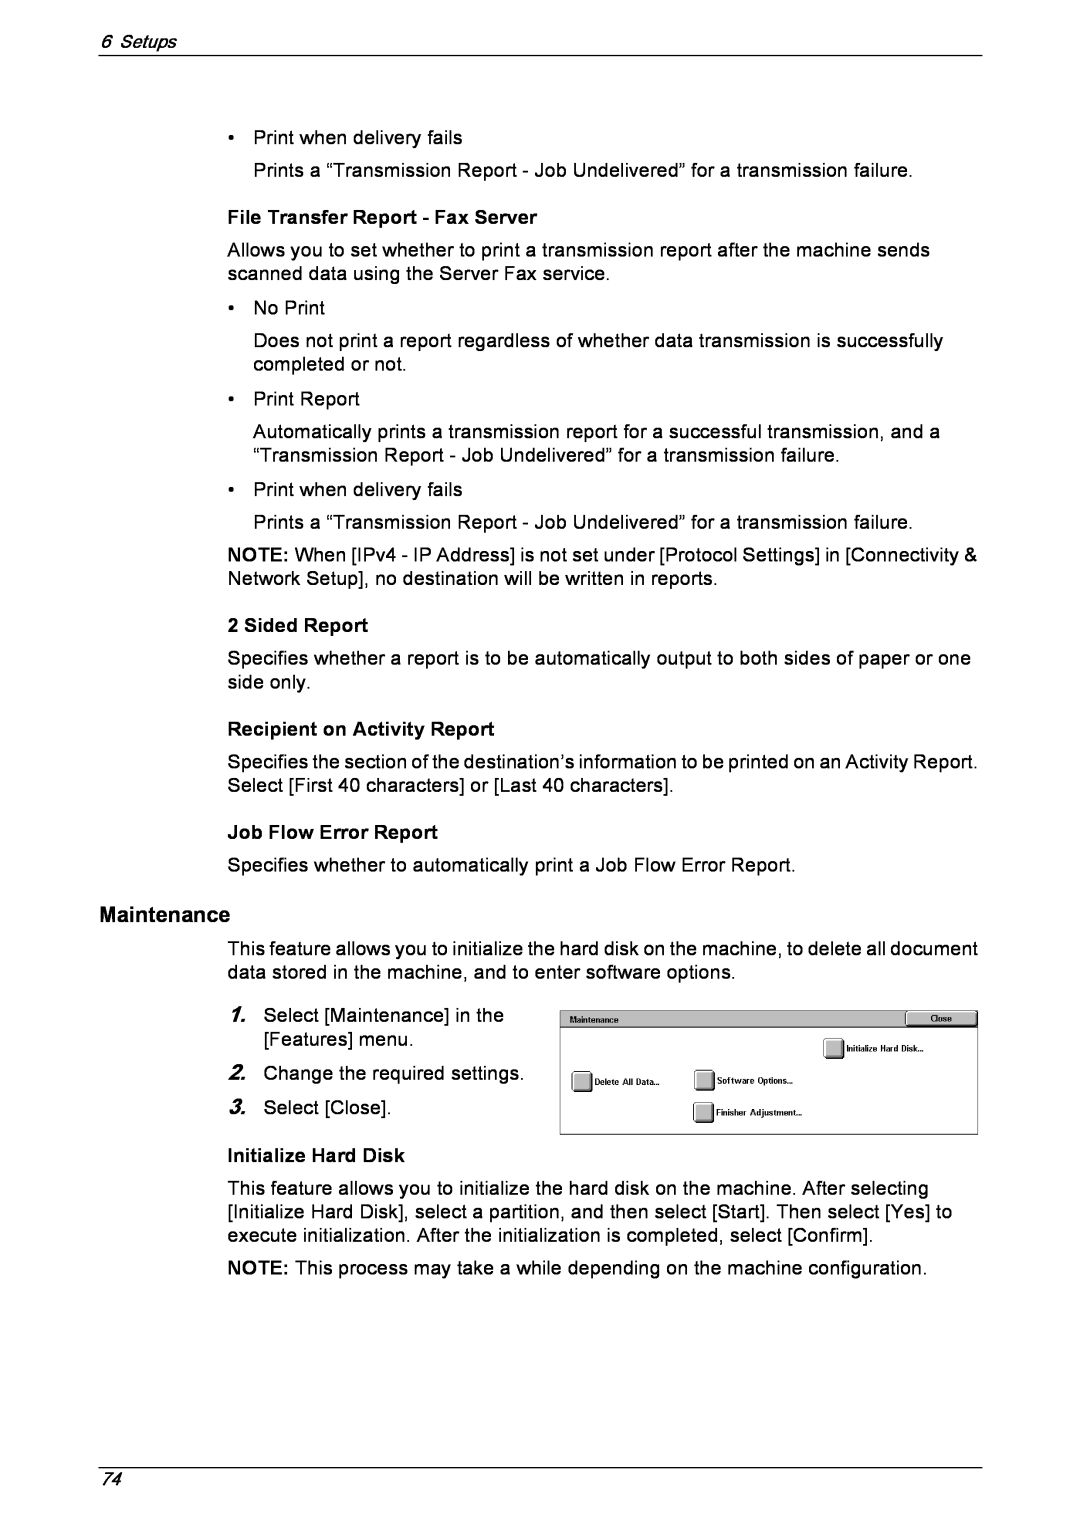 Xerox 5222 manual File Transfer Report - Fax Server, Sided Report, Recipient on Activity Report, Job Flow Error Report 